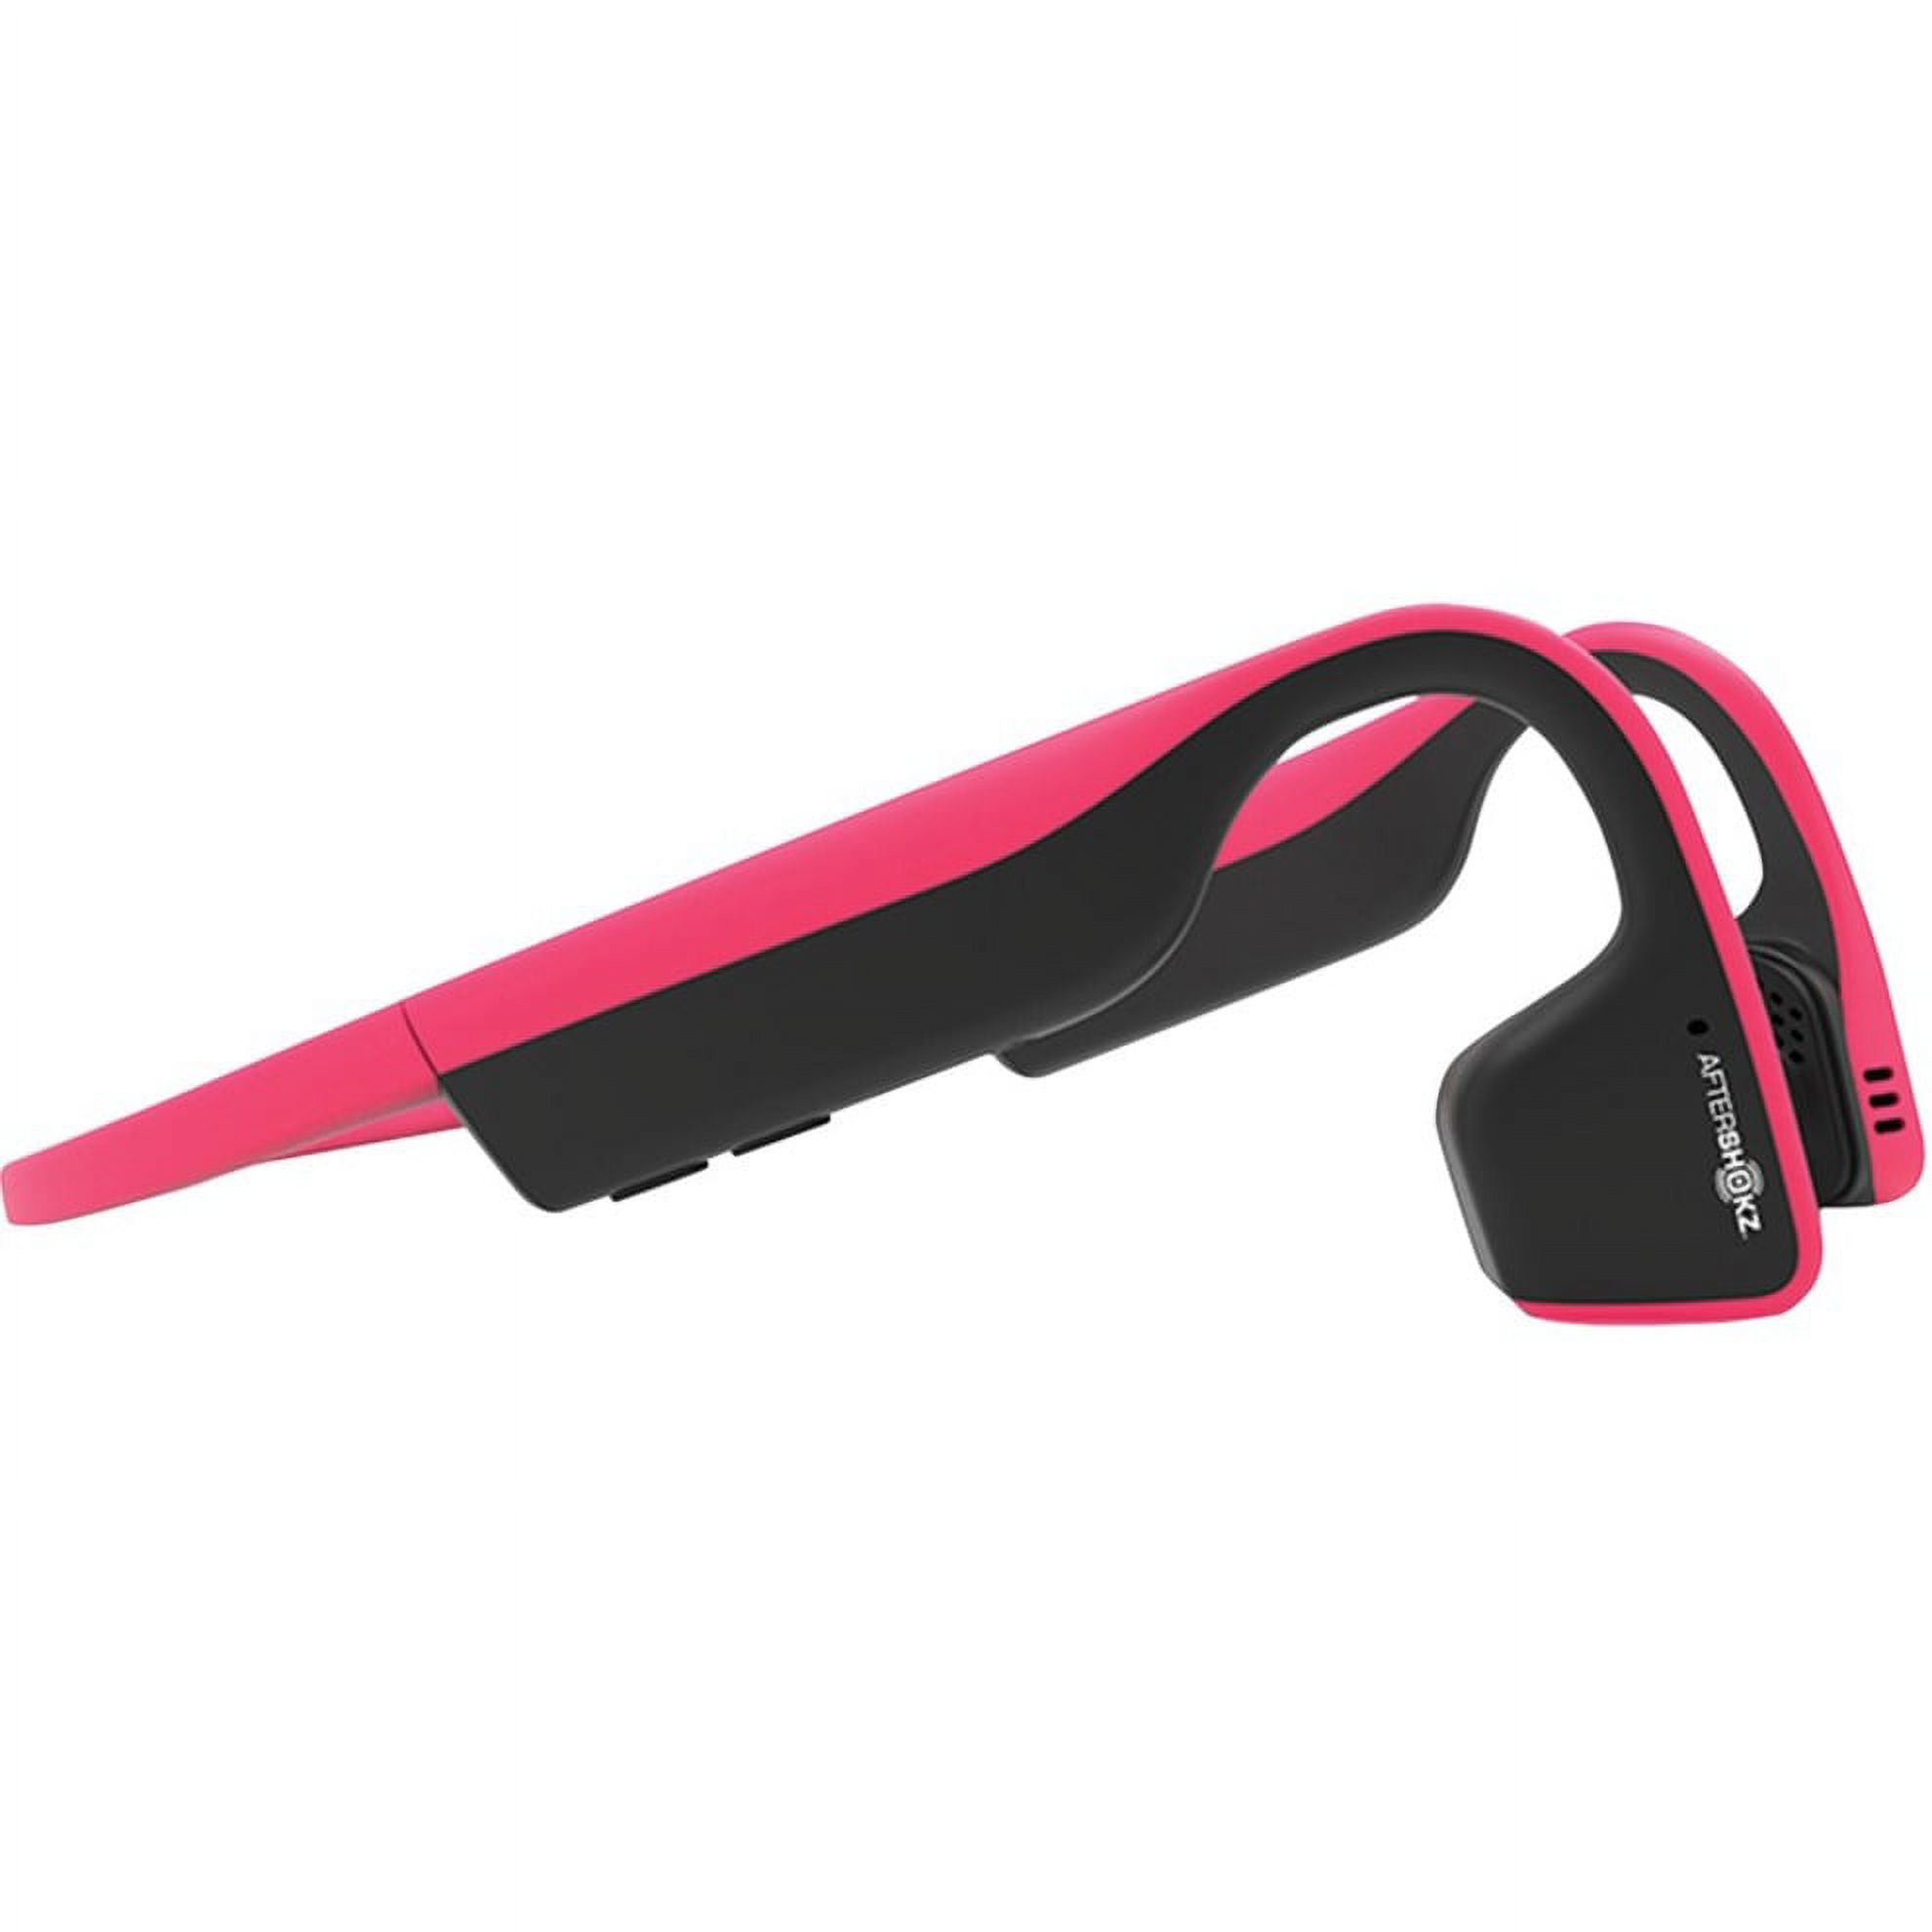 Aftershokz As600mpk Trekz Titanium Mini Bluetooth Stereo Headphones With Microphone (pink) - image 3 of 10